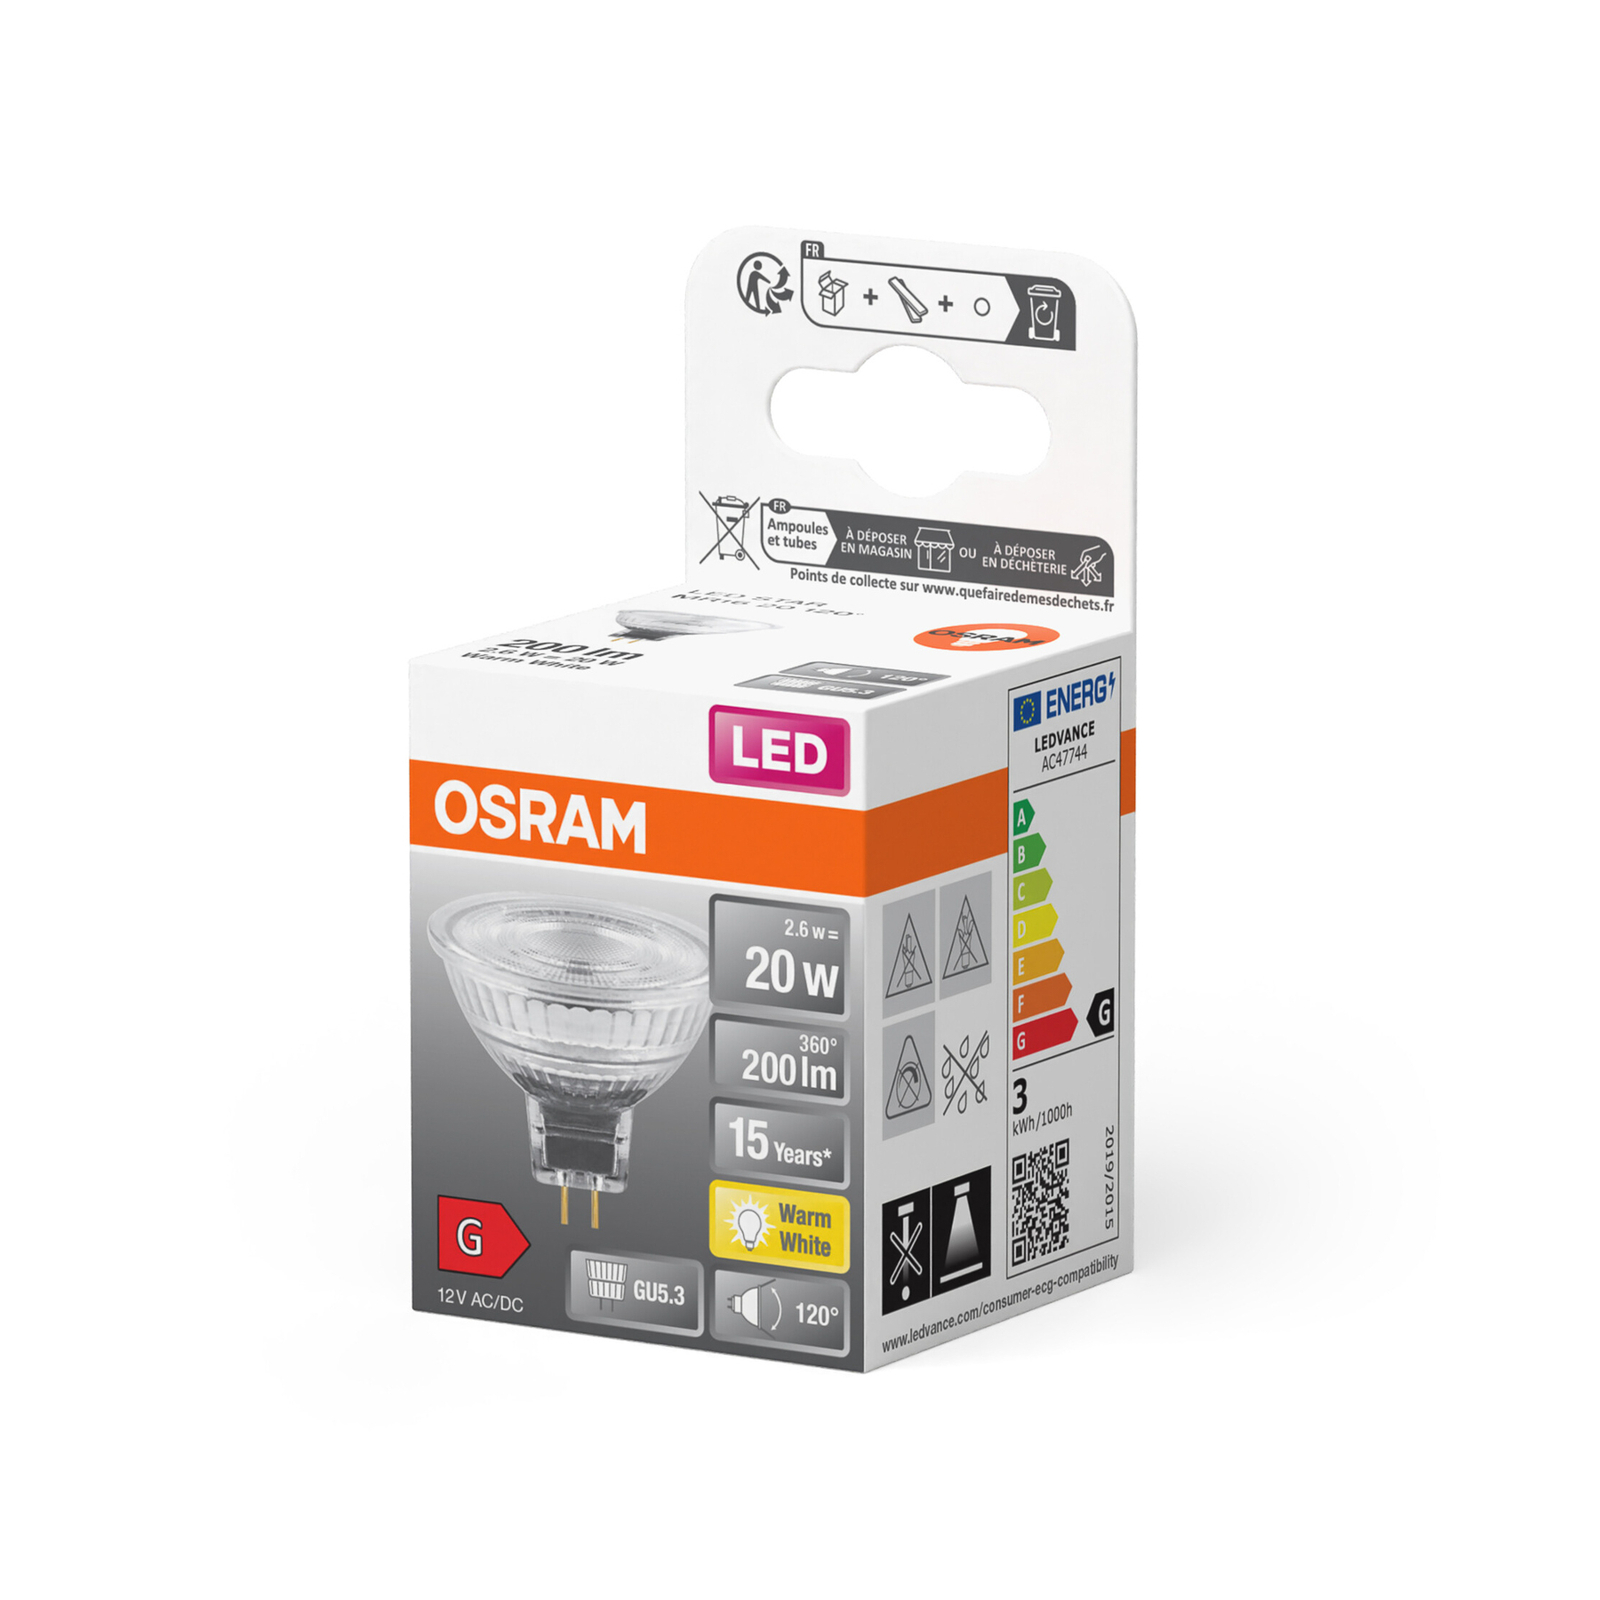 OSRAM LED reflectorlamp, GU5.3, 2,6 W, 12 V, 2700 K, 120°